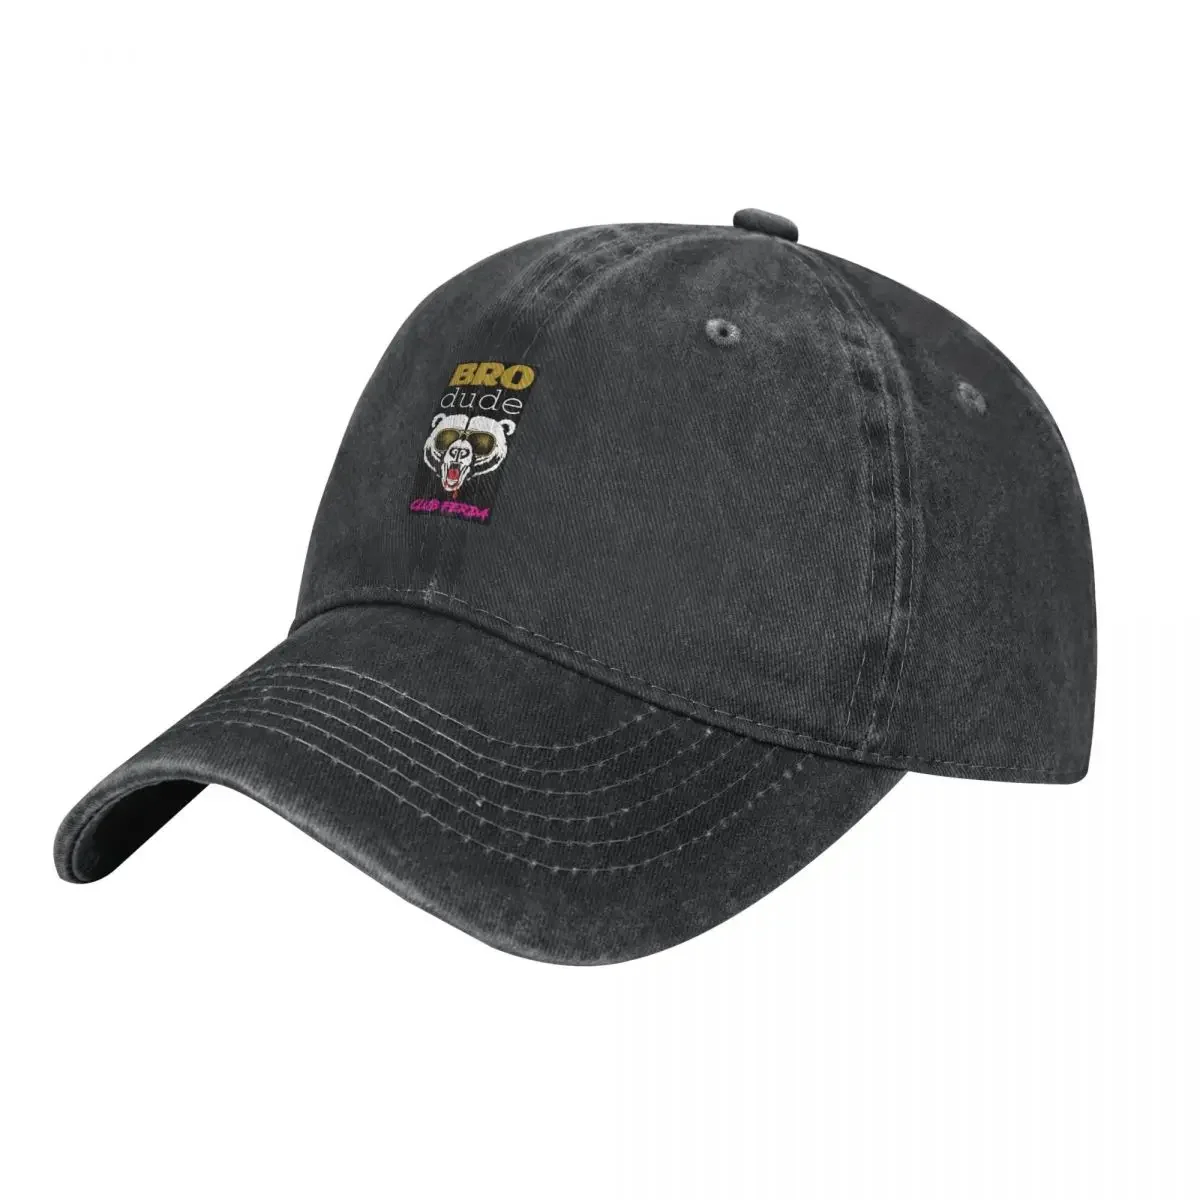 

Bro Dude Energy - Club Ferda Variant - Letterkenny Season 8 Cowboy Hat Fishing cap Trucker Cap Men's Hats Women's